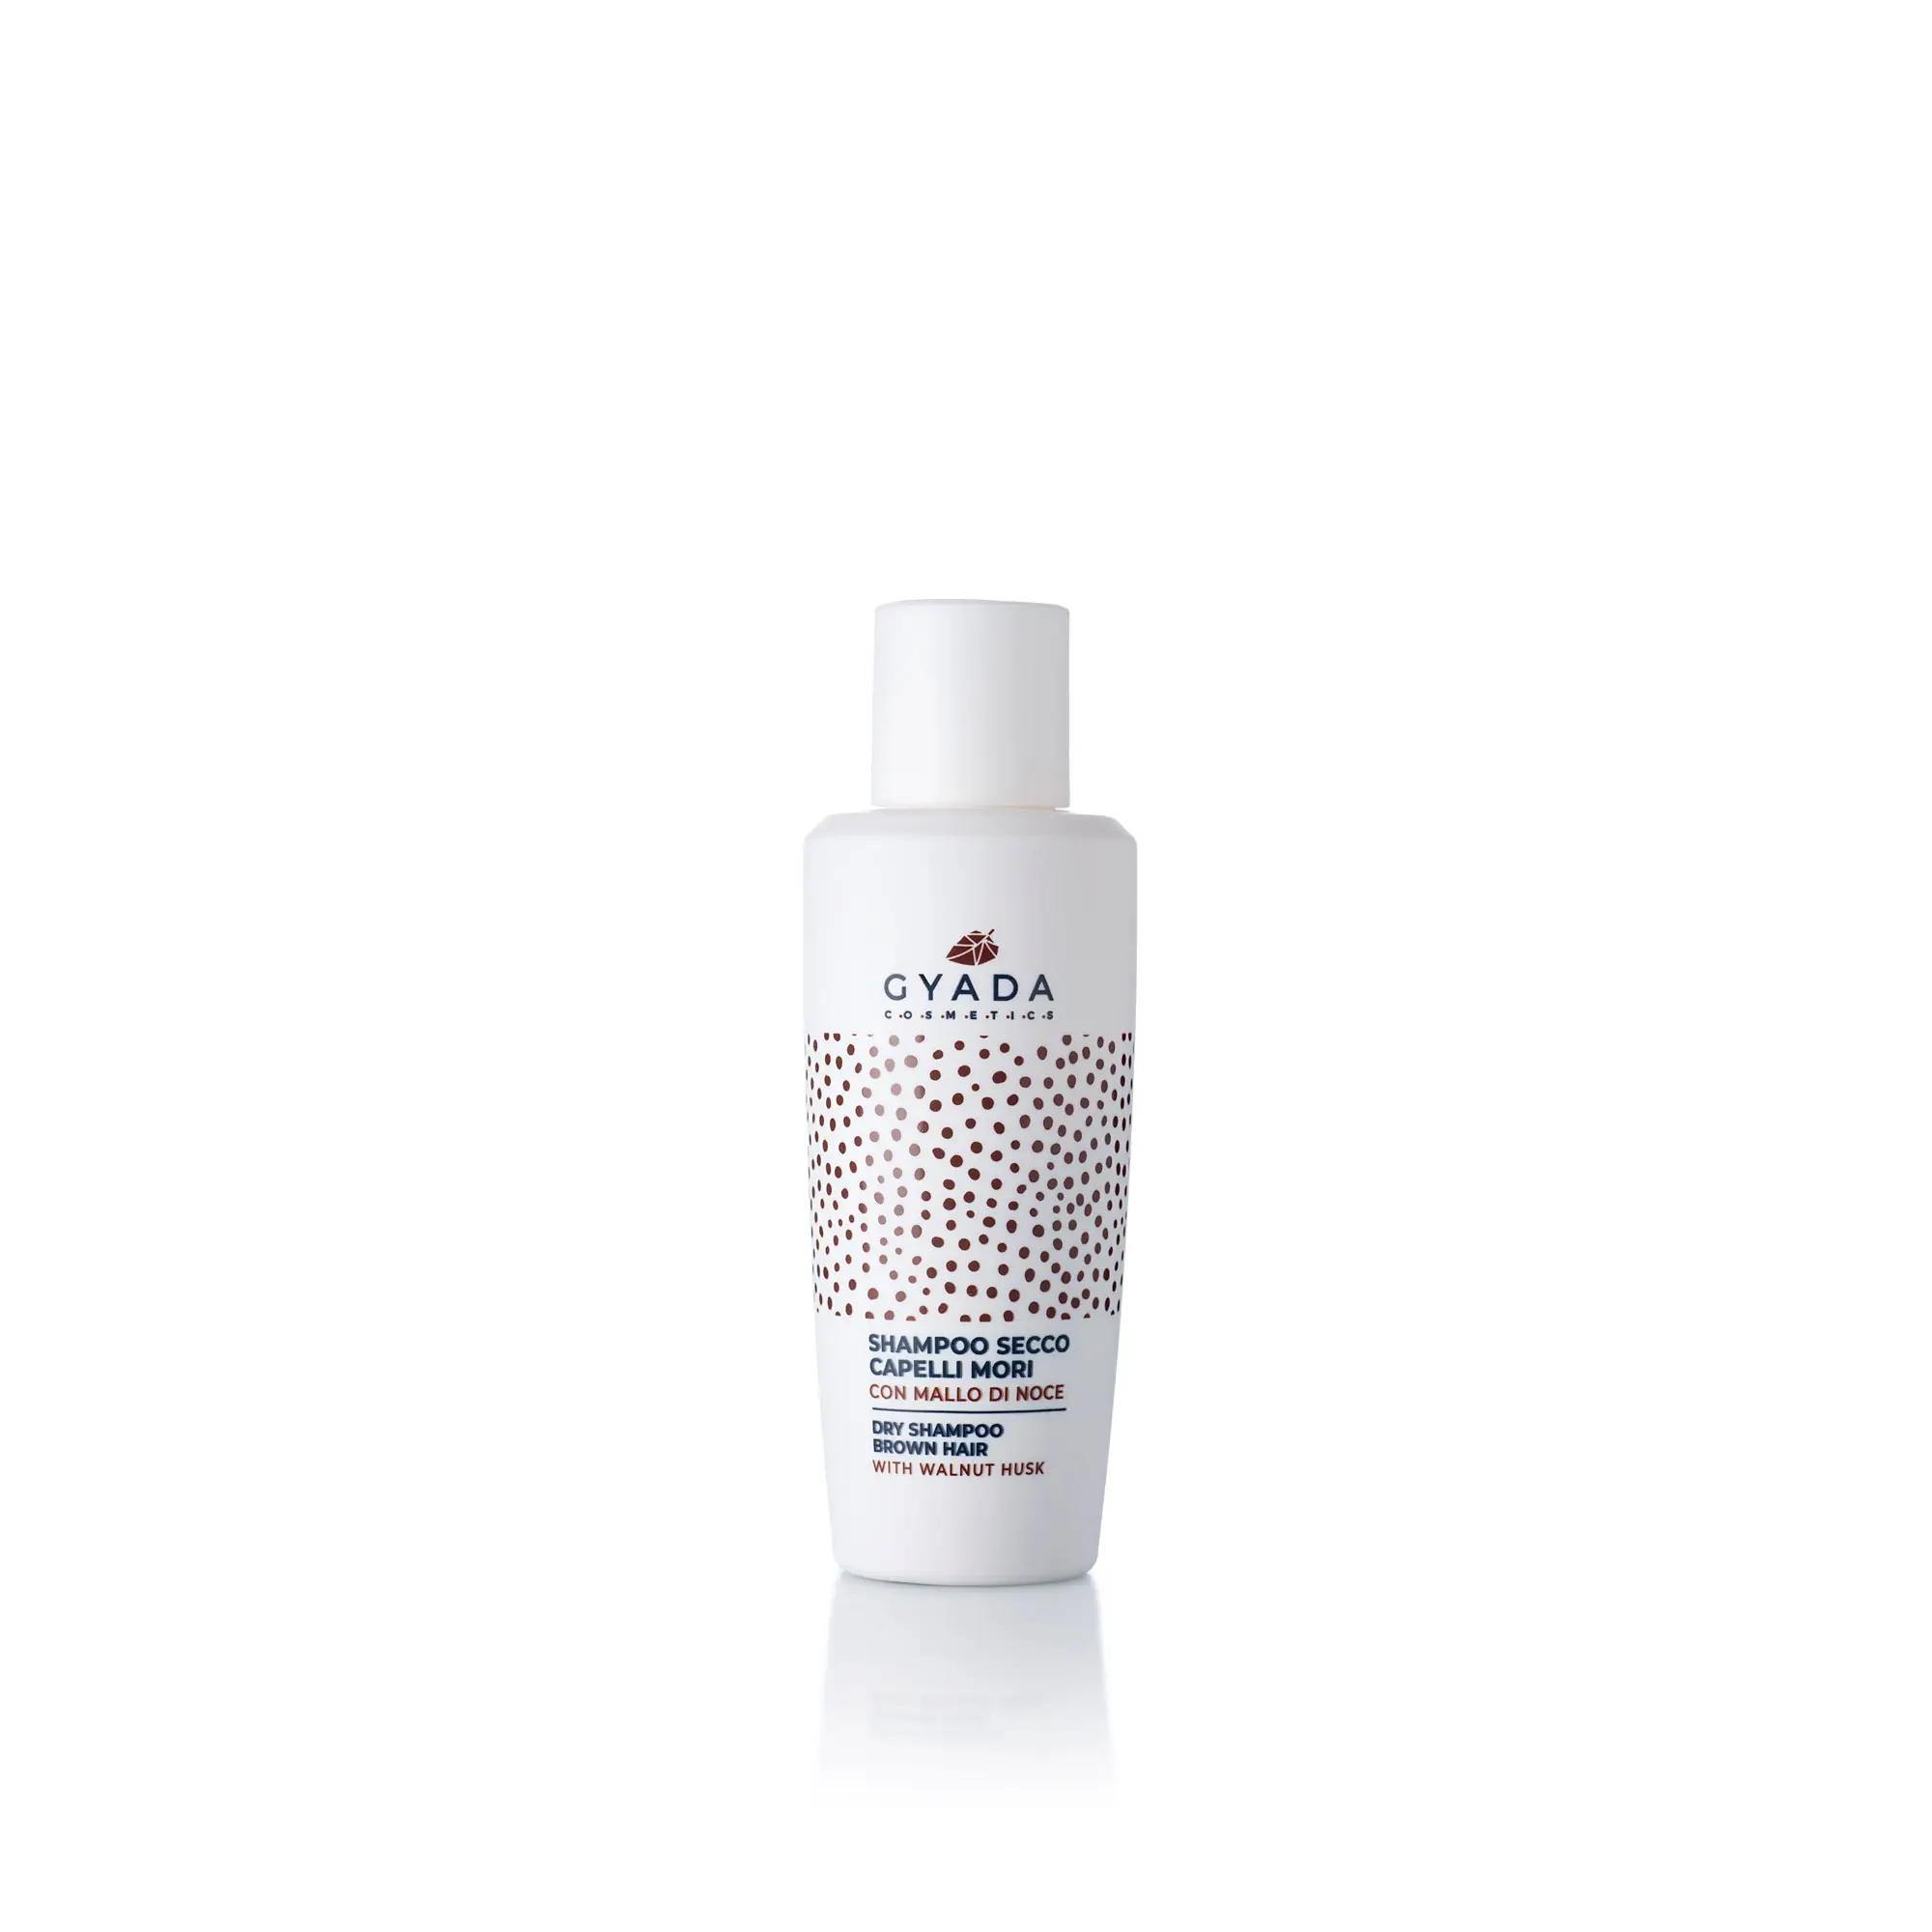 GYADA Refresh ITALY powder Dry Shampoo Brown Hair 50gr treatment detangler brush care dry shampoo